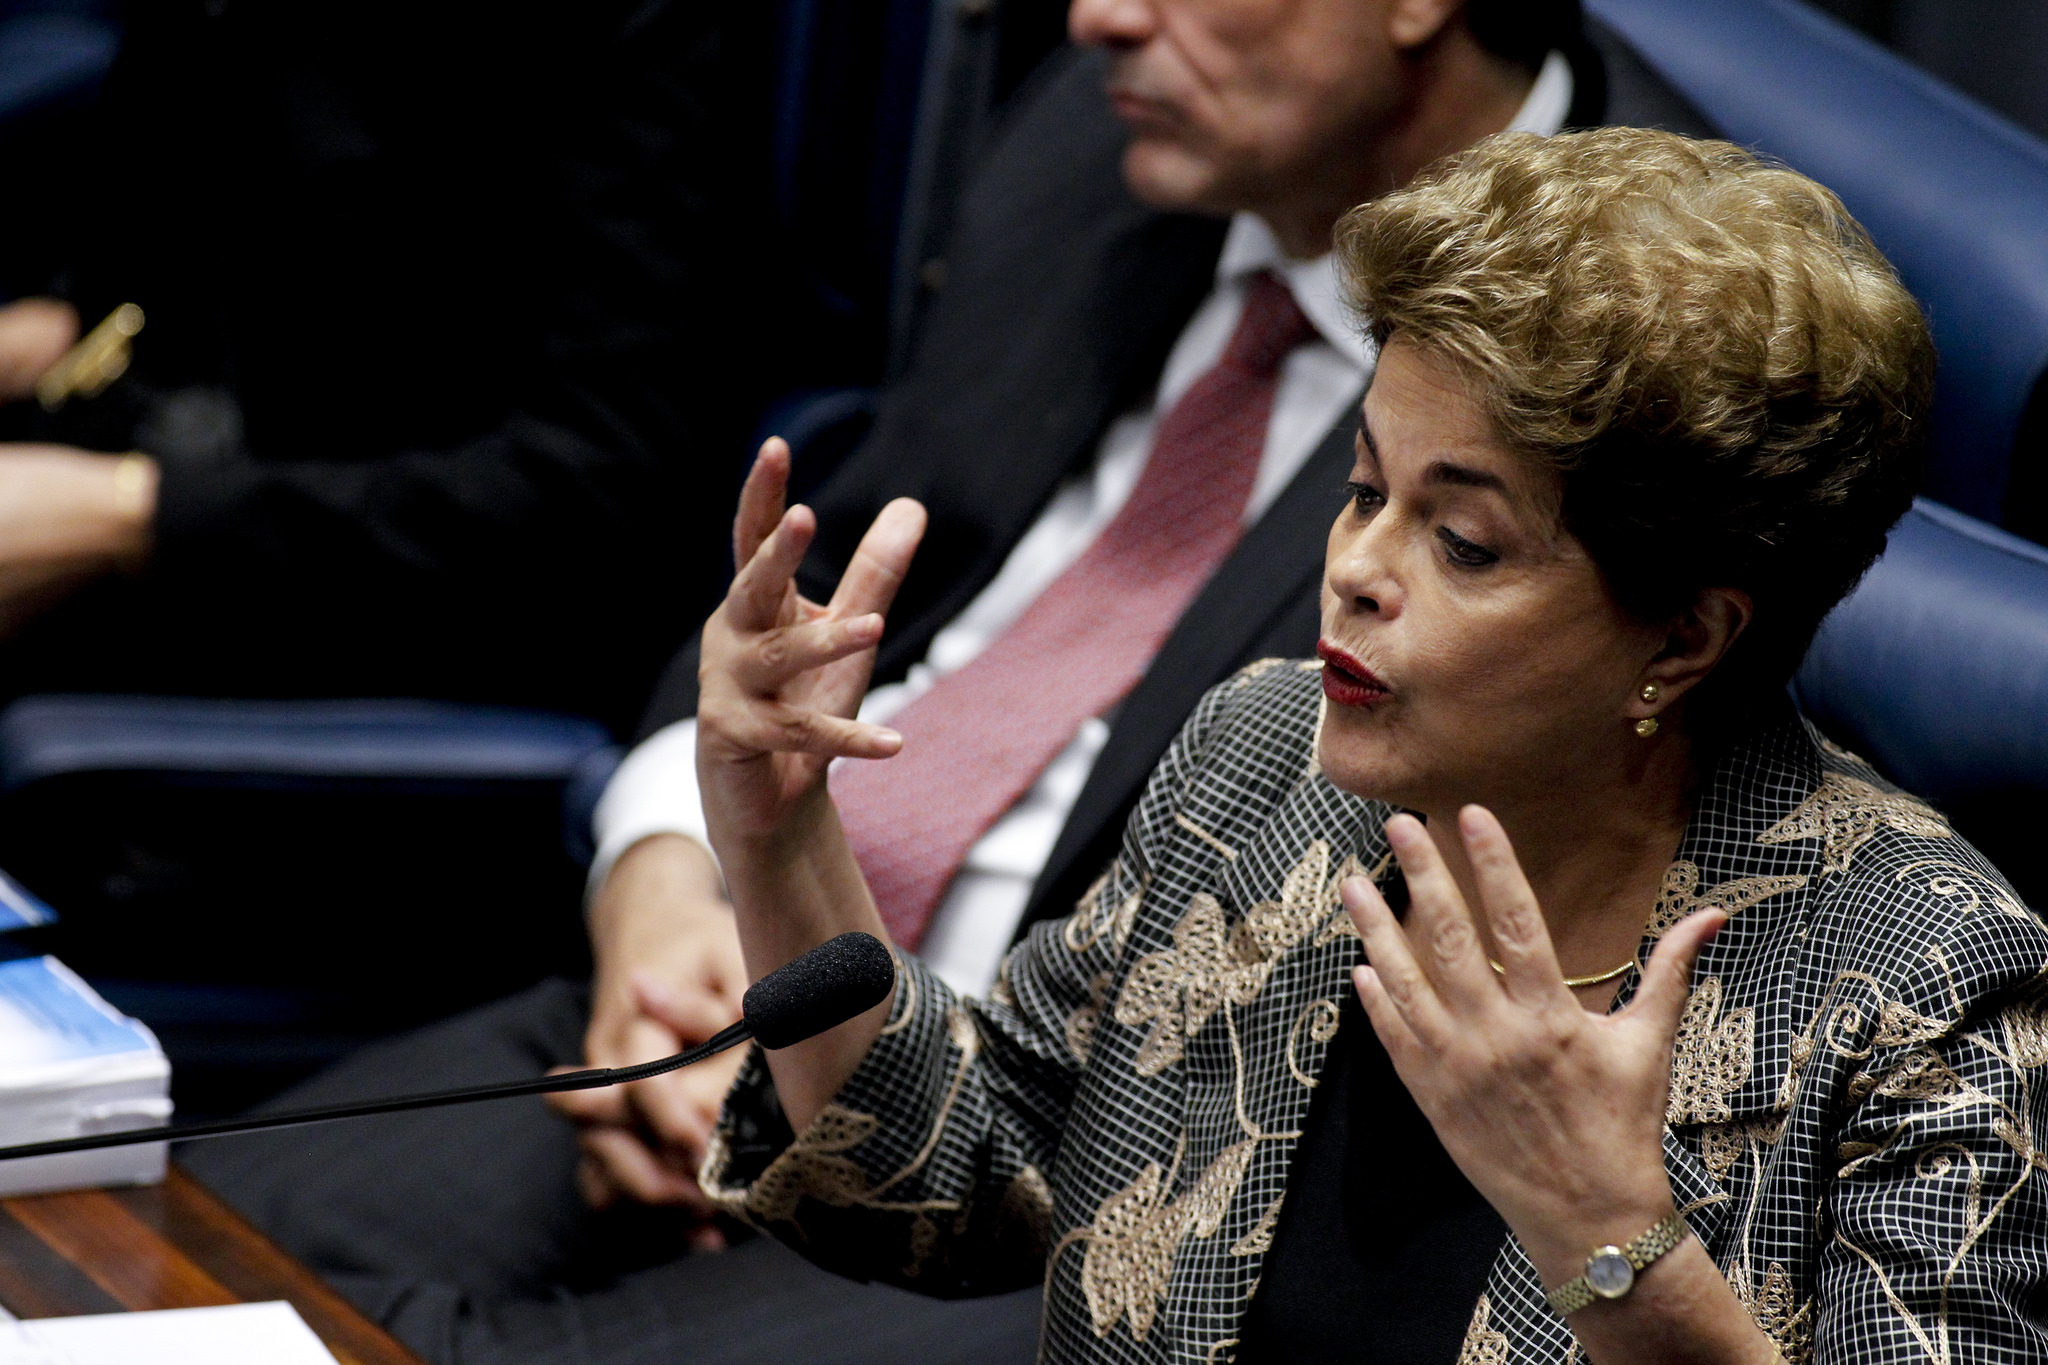 Marri Nogueira/Agência Senado